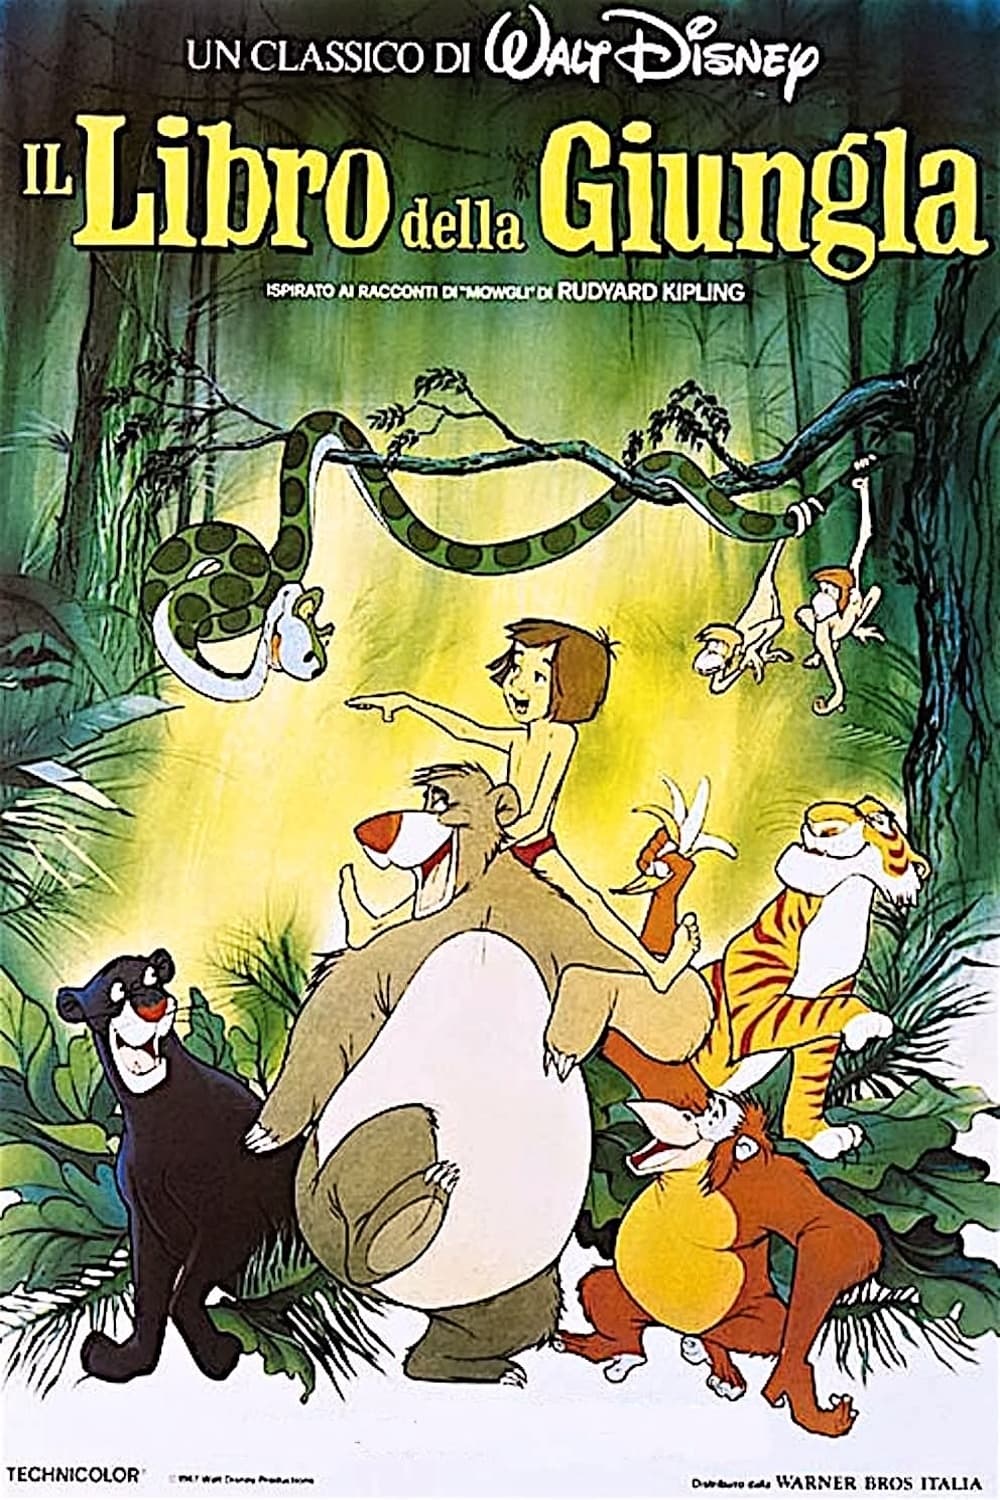 El libro de la selva (película de 1967) - Wikipedia, la enciclopedia libre